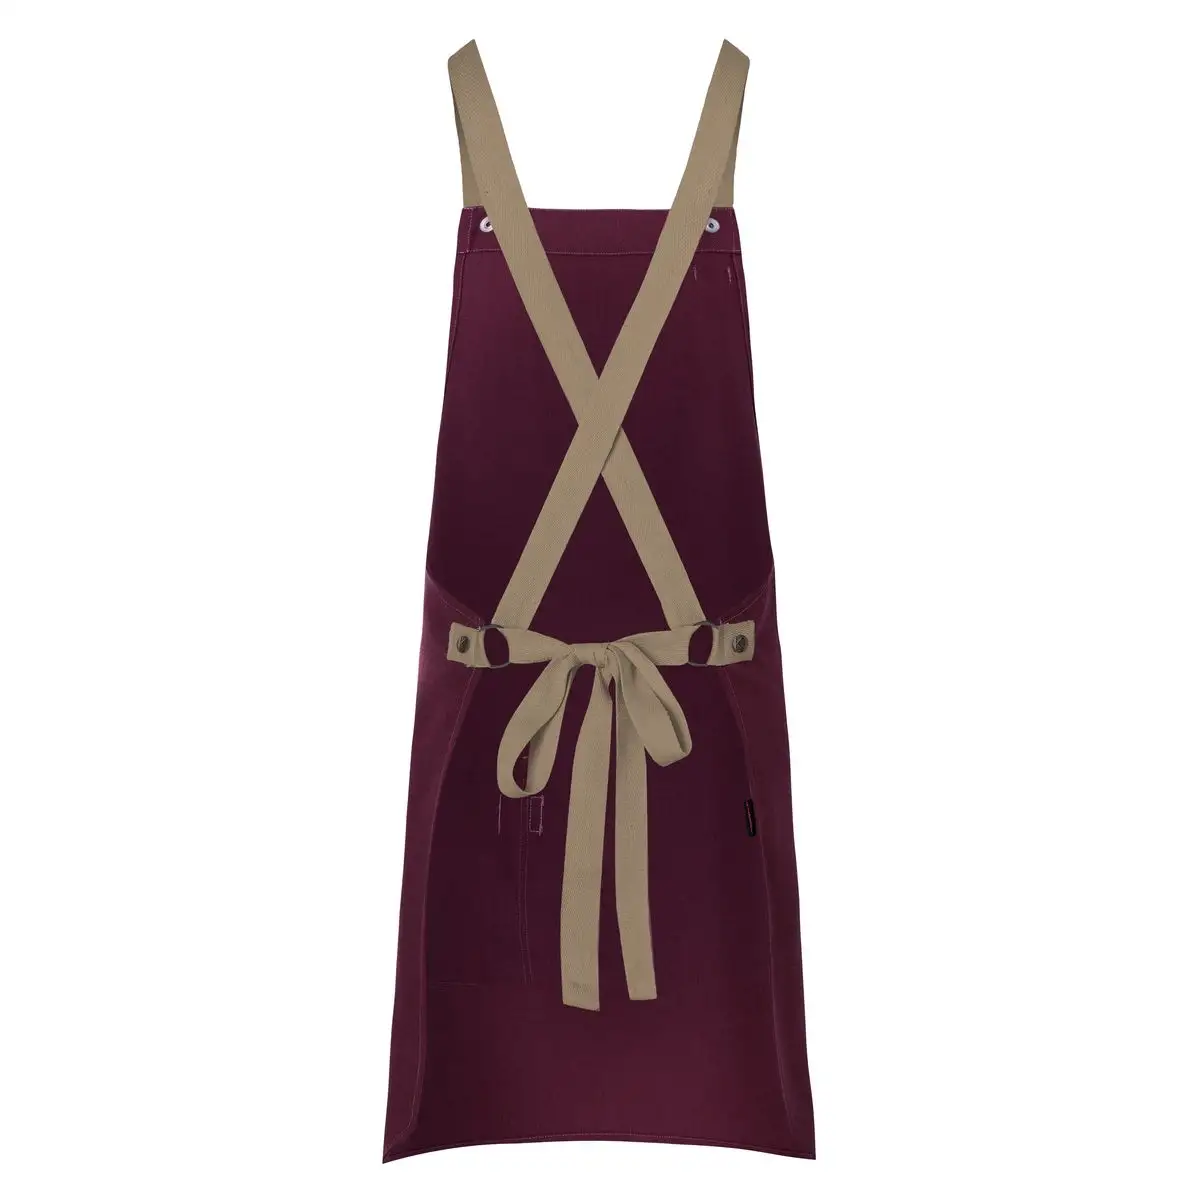 Bib apron with crossed ribbons